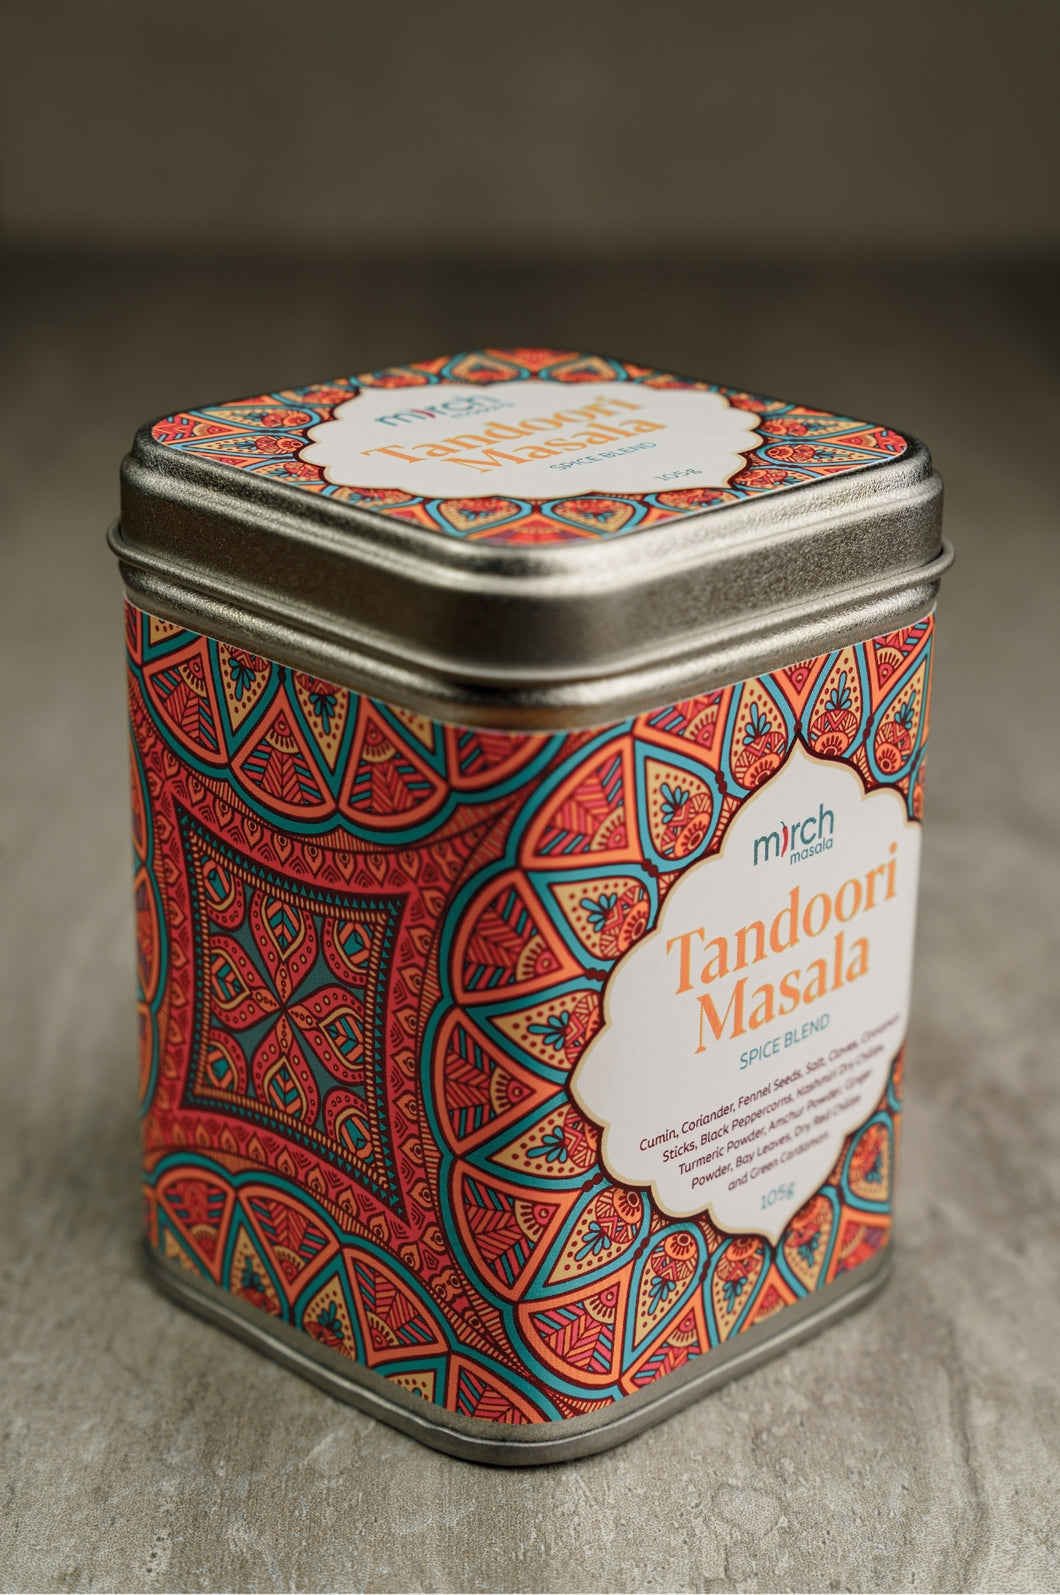 A tin of Tandoori Masala